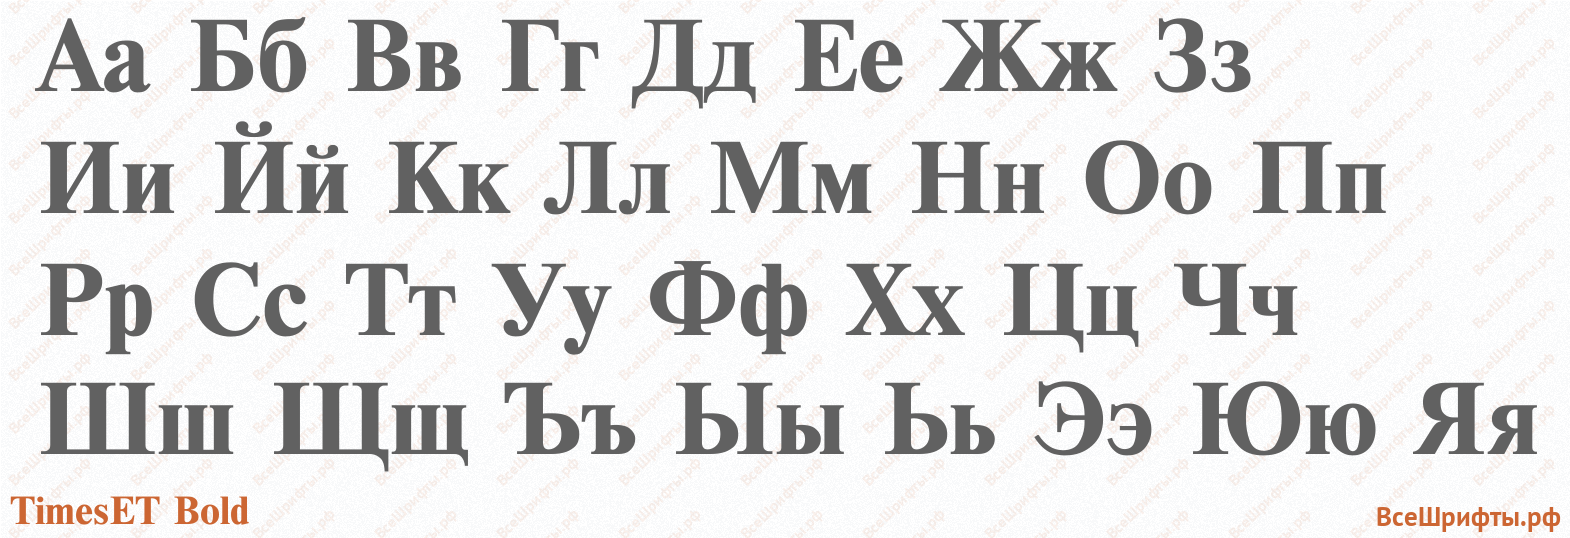 Шрифт TimesET Bold с русскими буквами